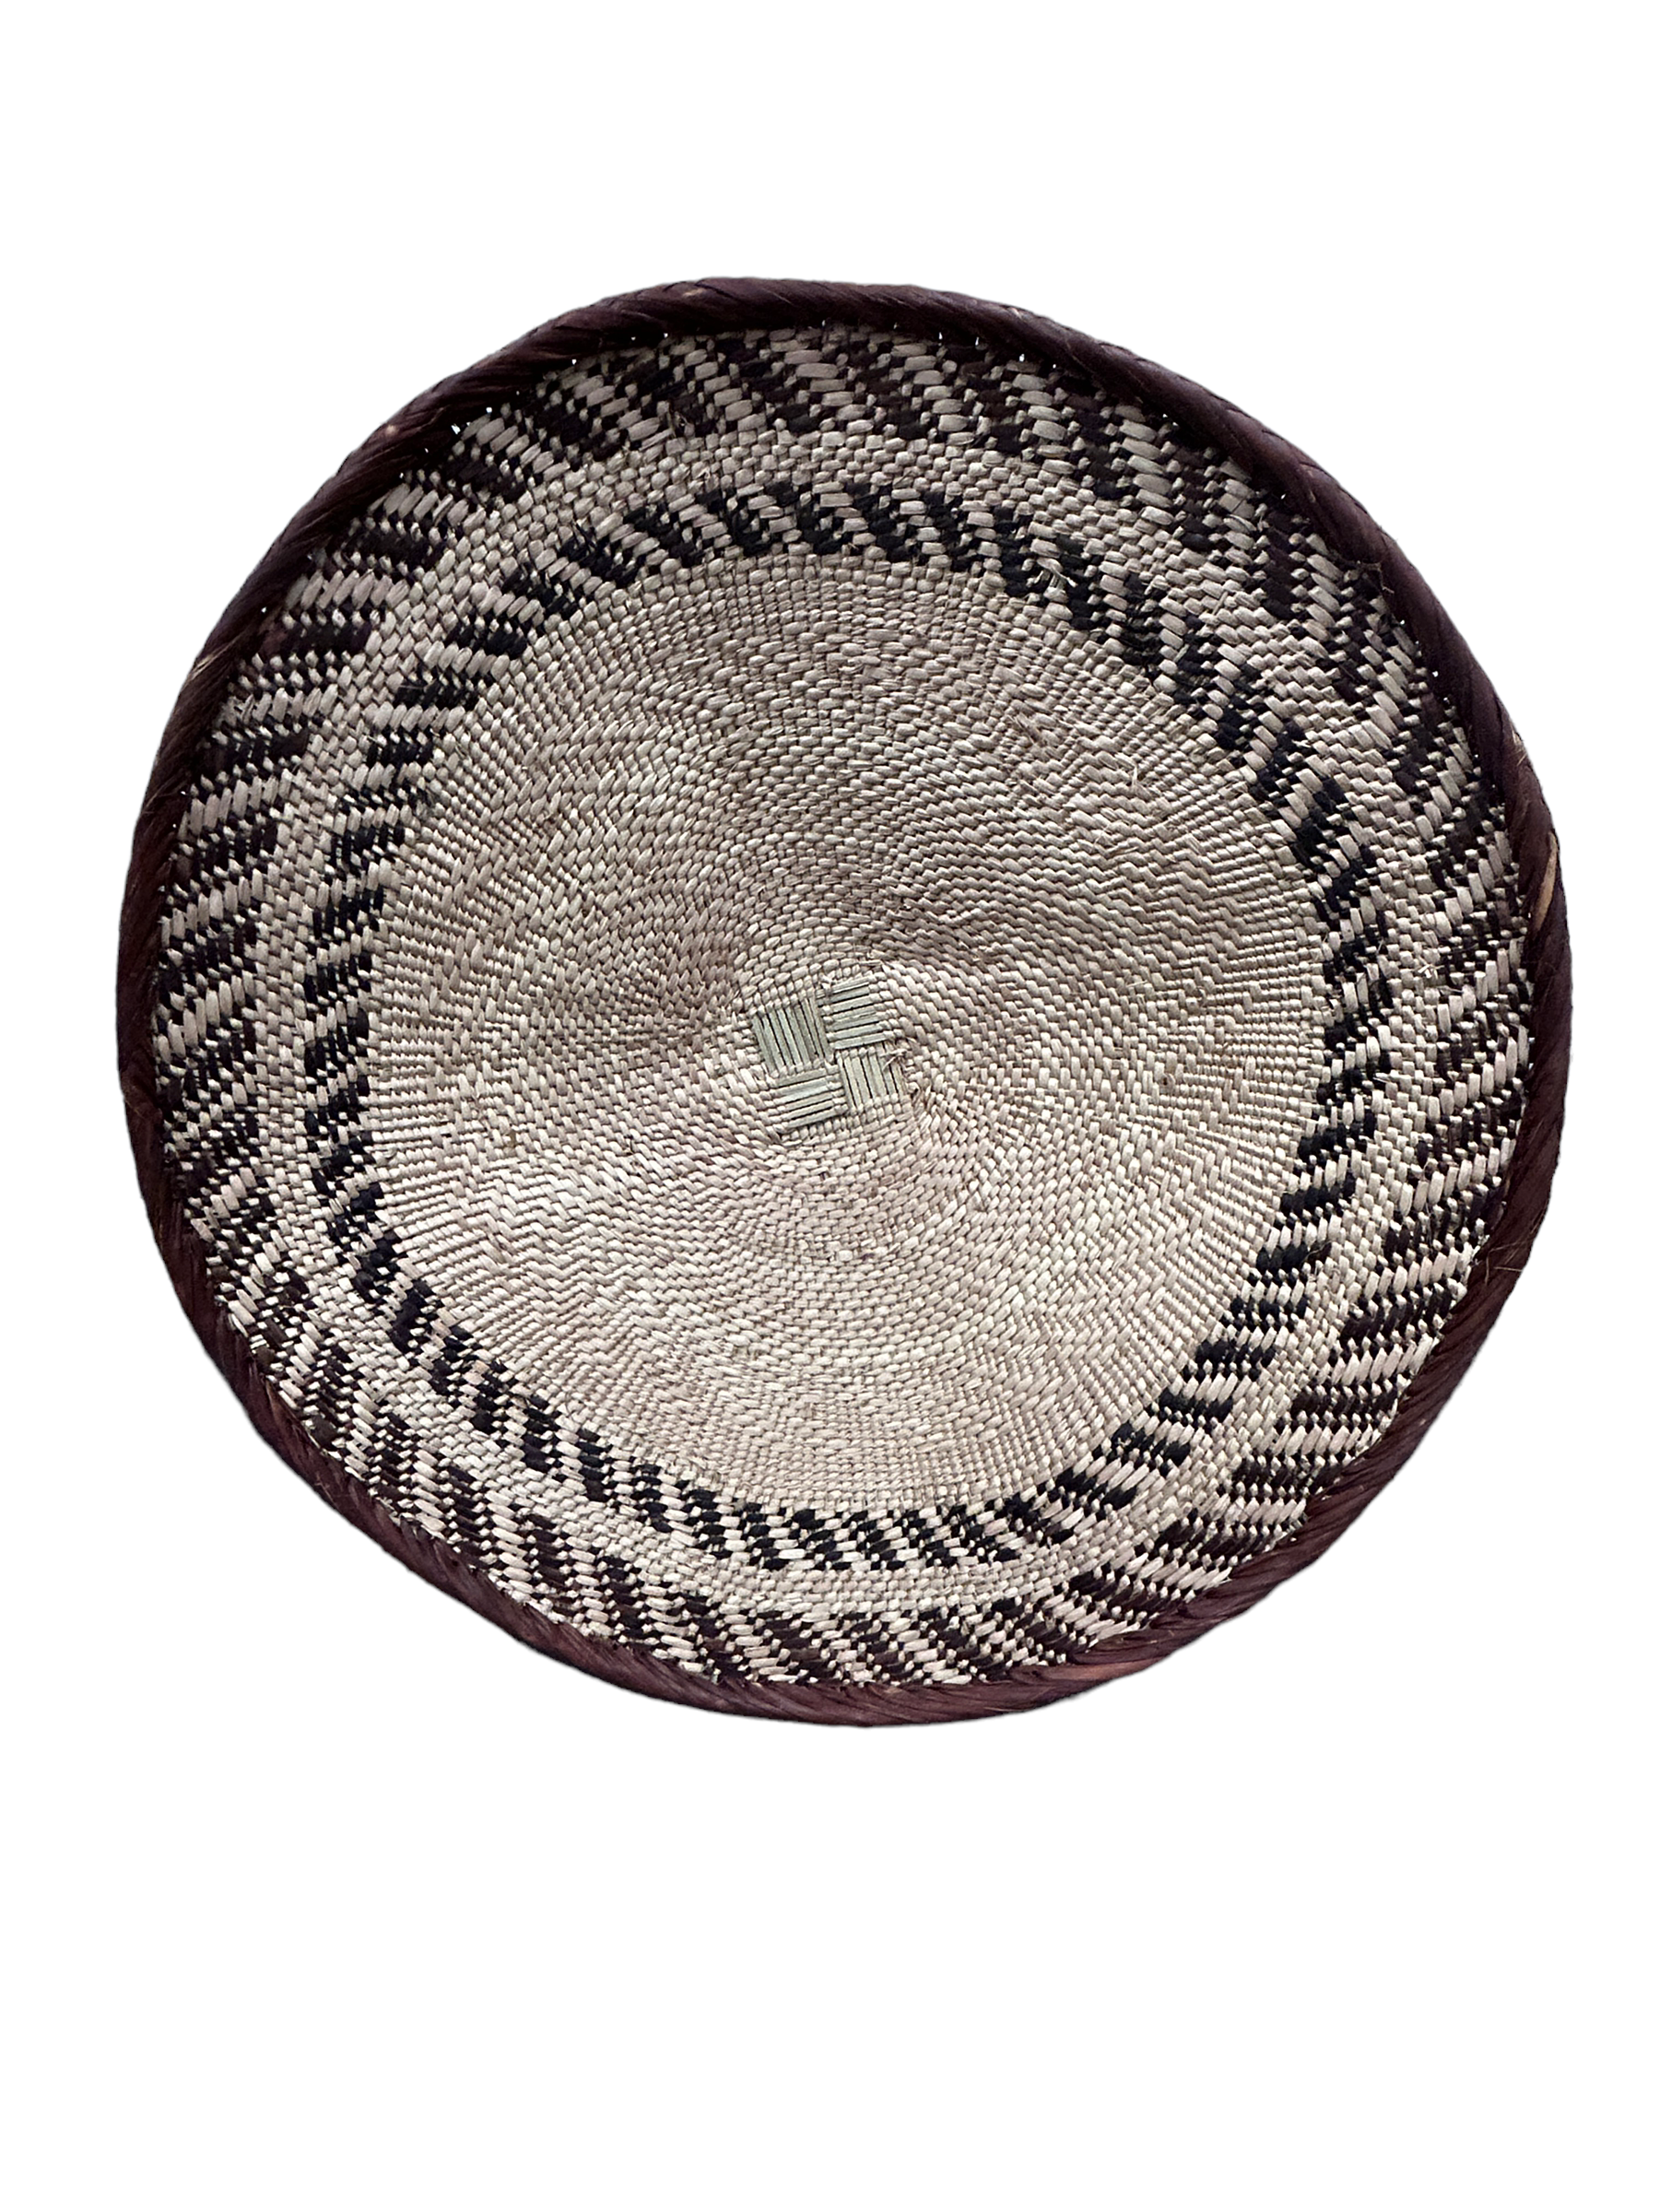 botanicalboysuk Tonga Basket Natural (45-27)